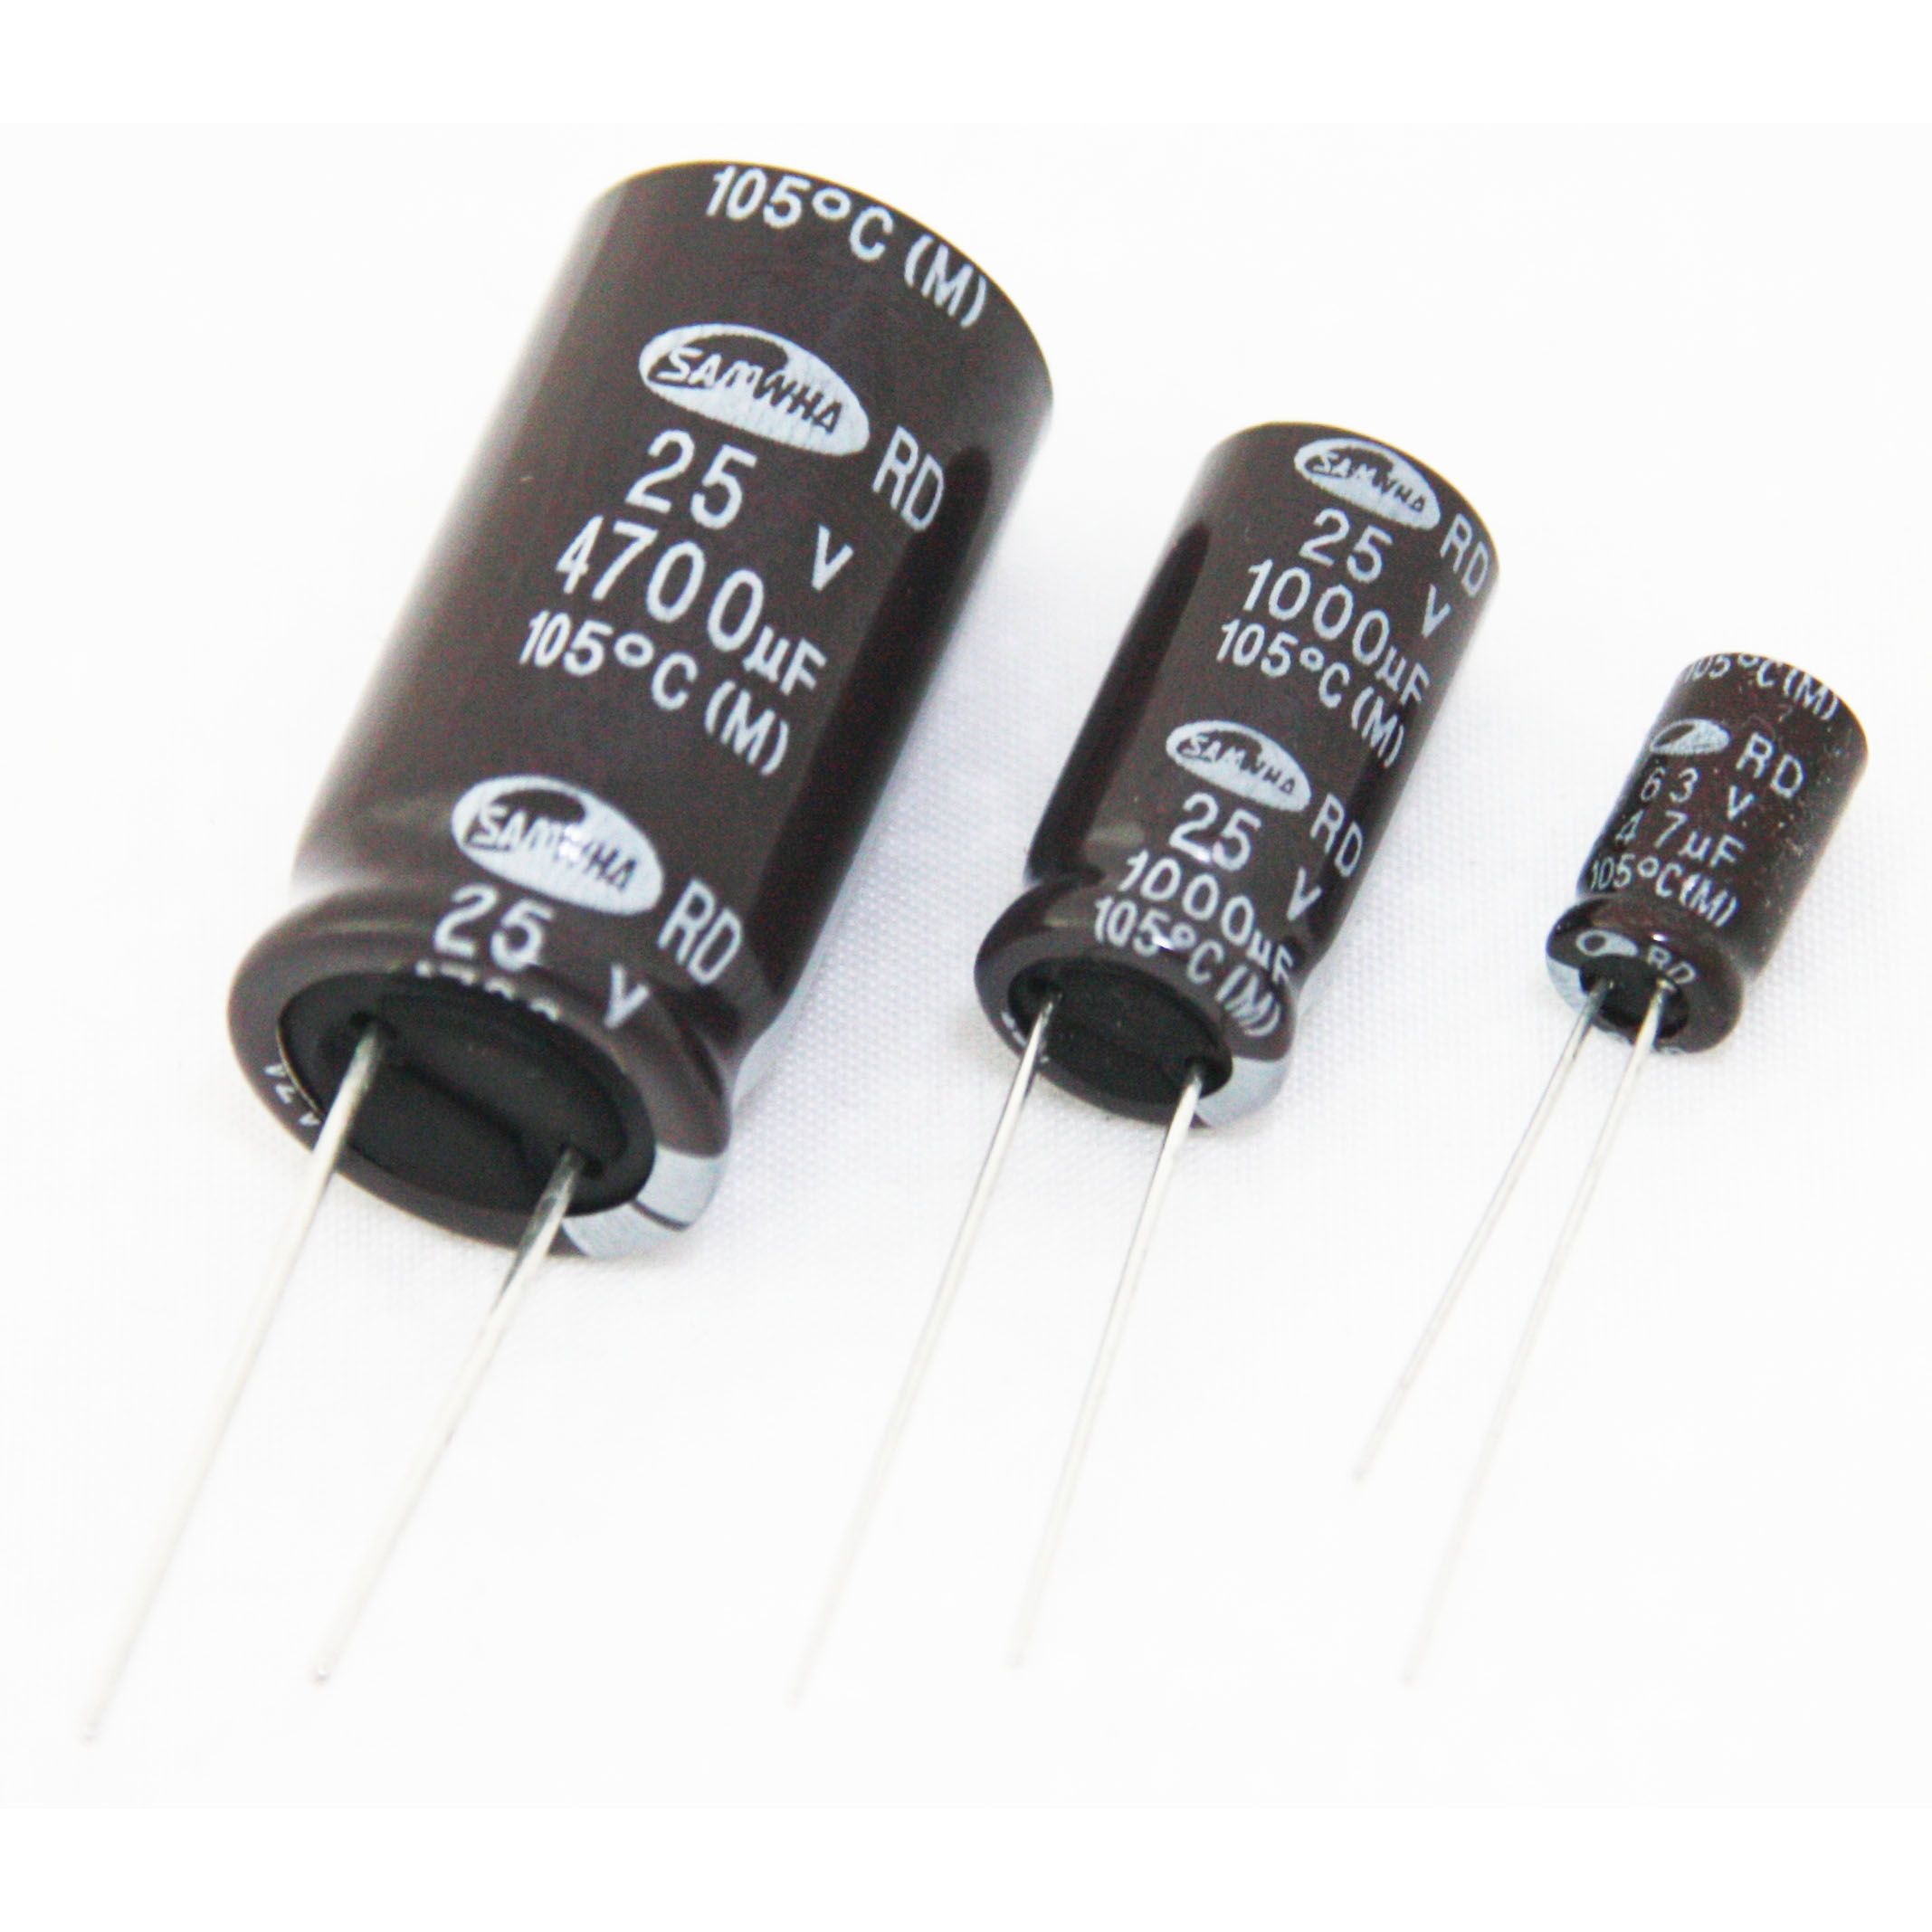 Electrolytic capacitor 105° 6800uF-10V